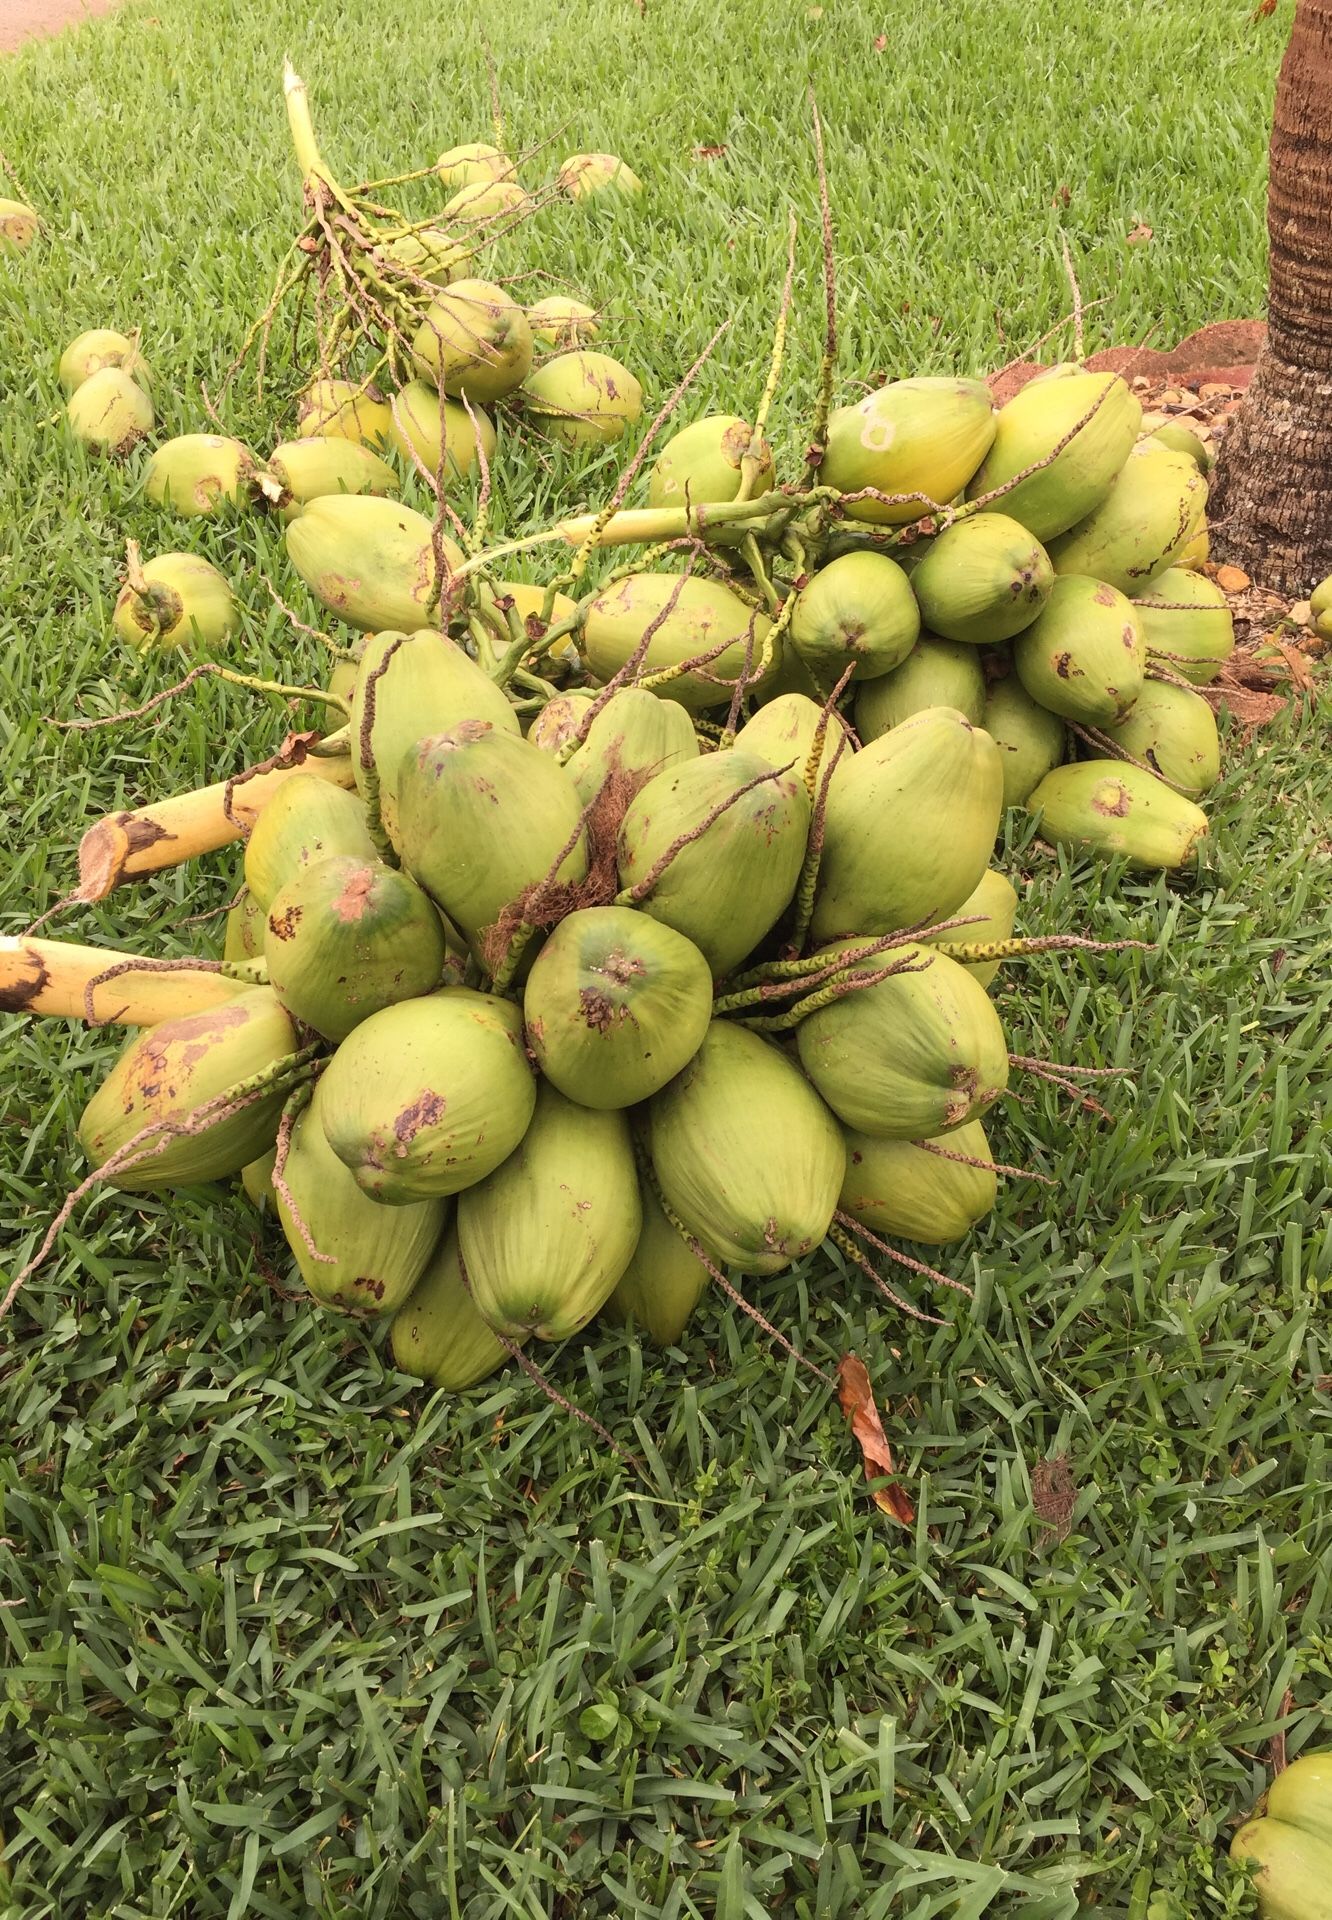 Fresh coconuts 2 per dollar